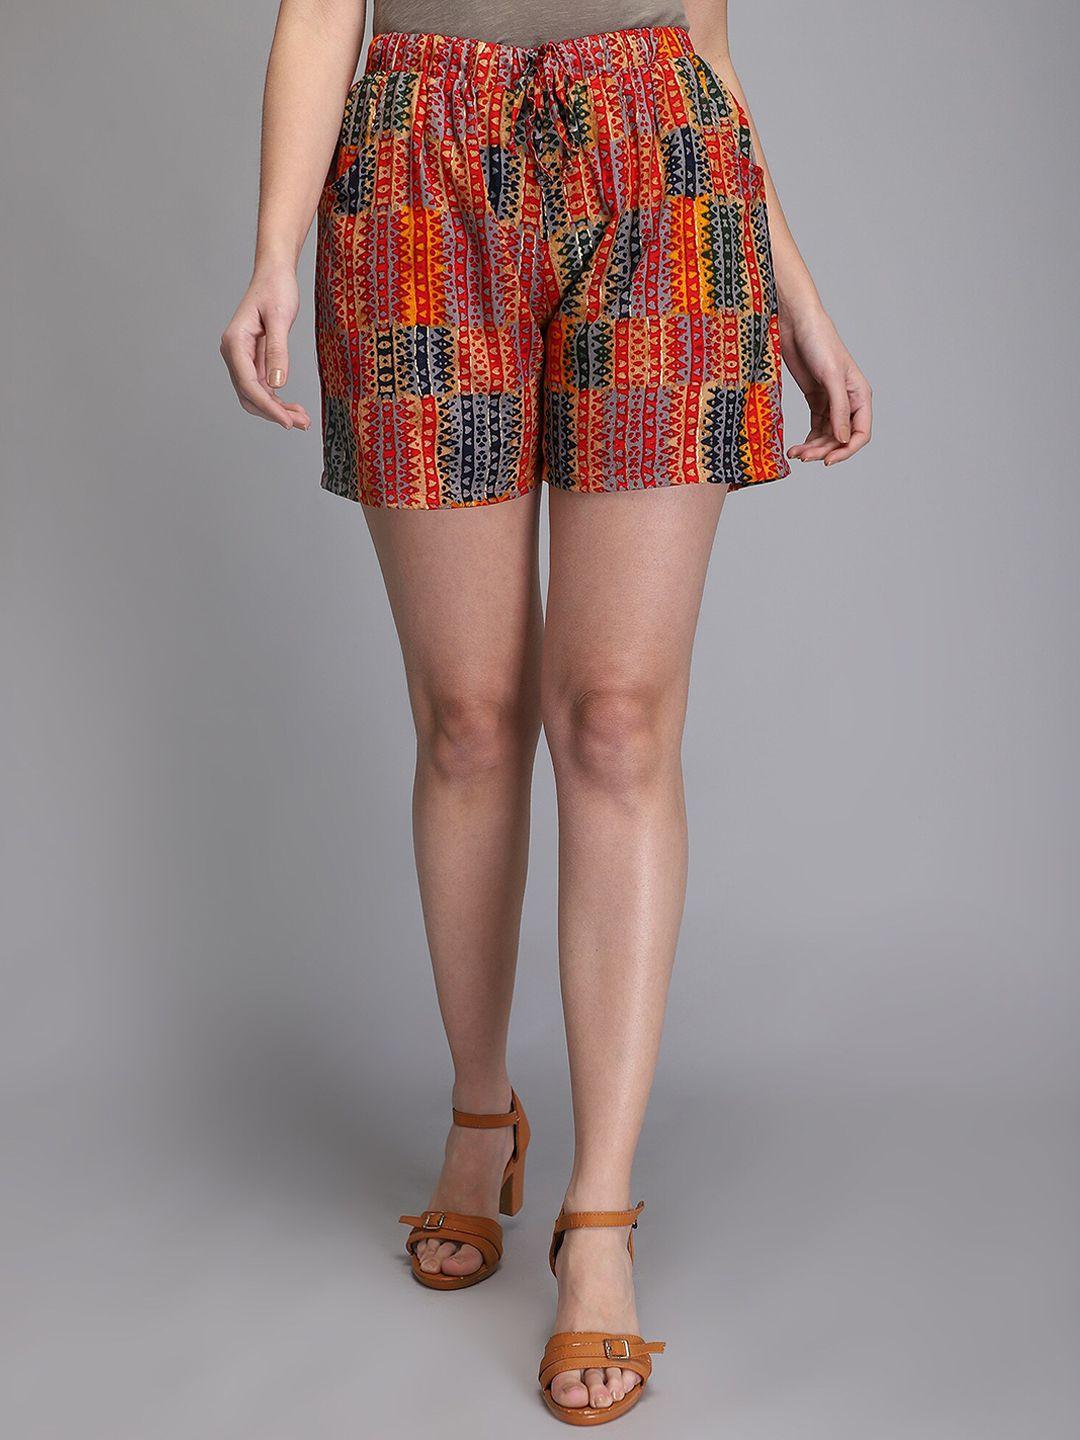 aditi-wasan-women-geometric-printed-mid-rise-shorts